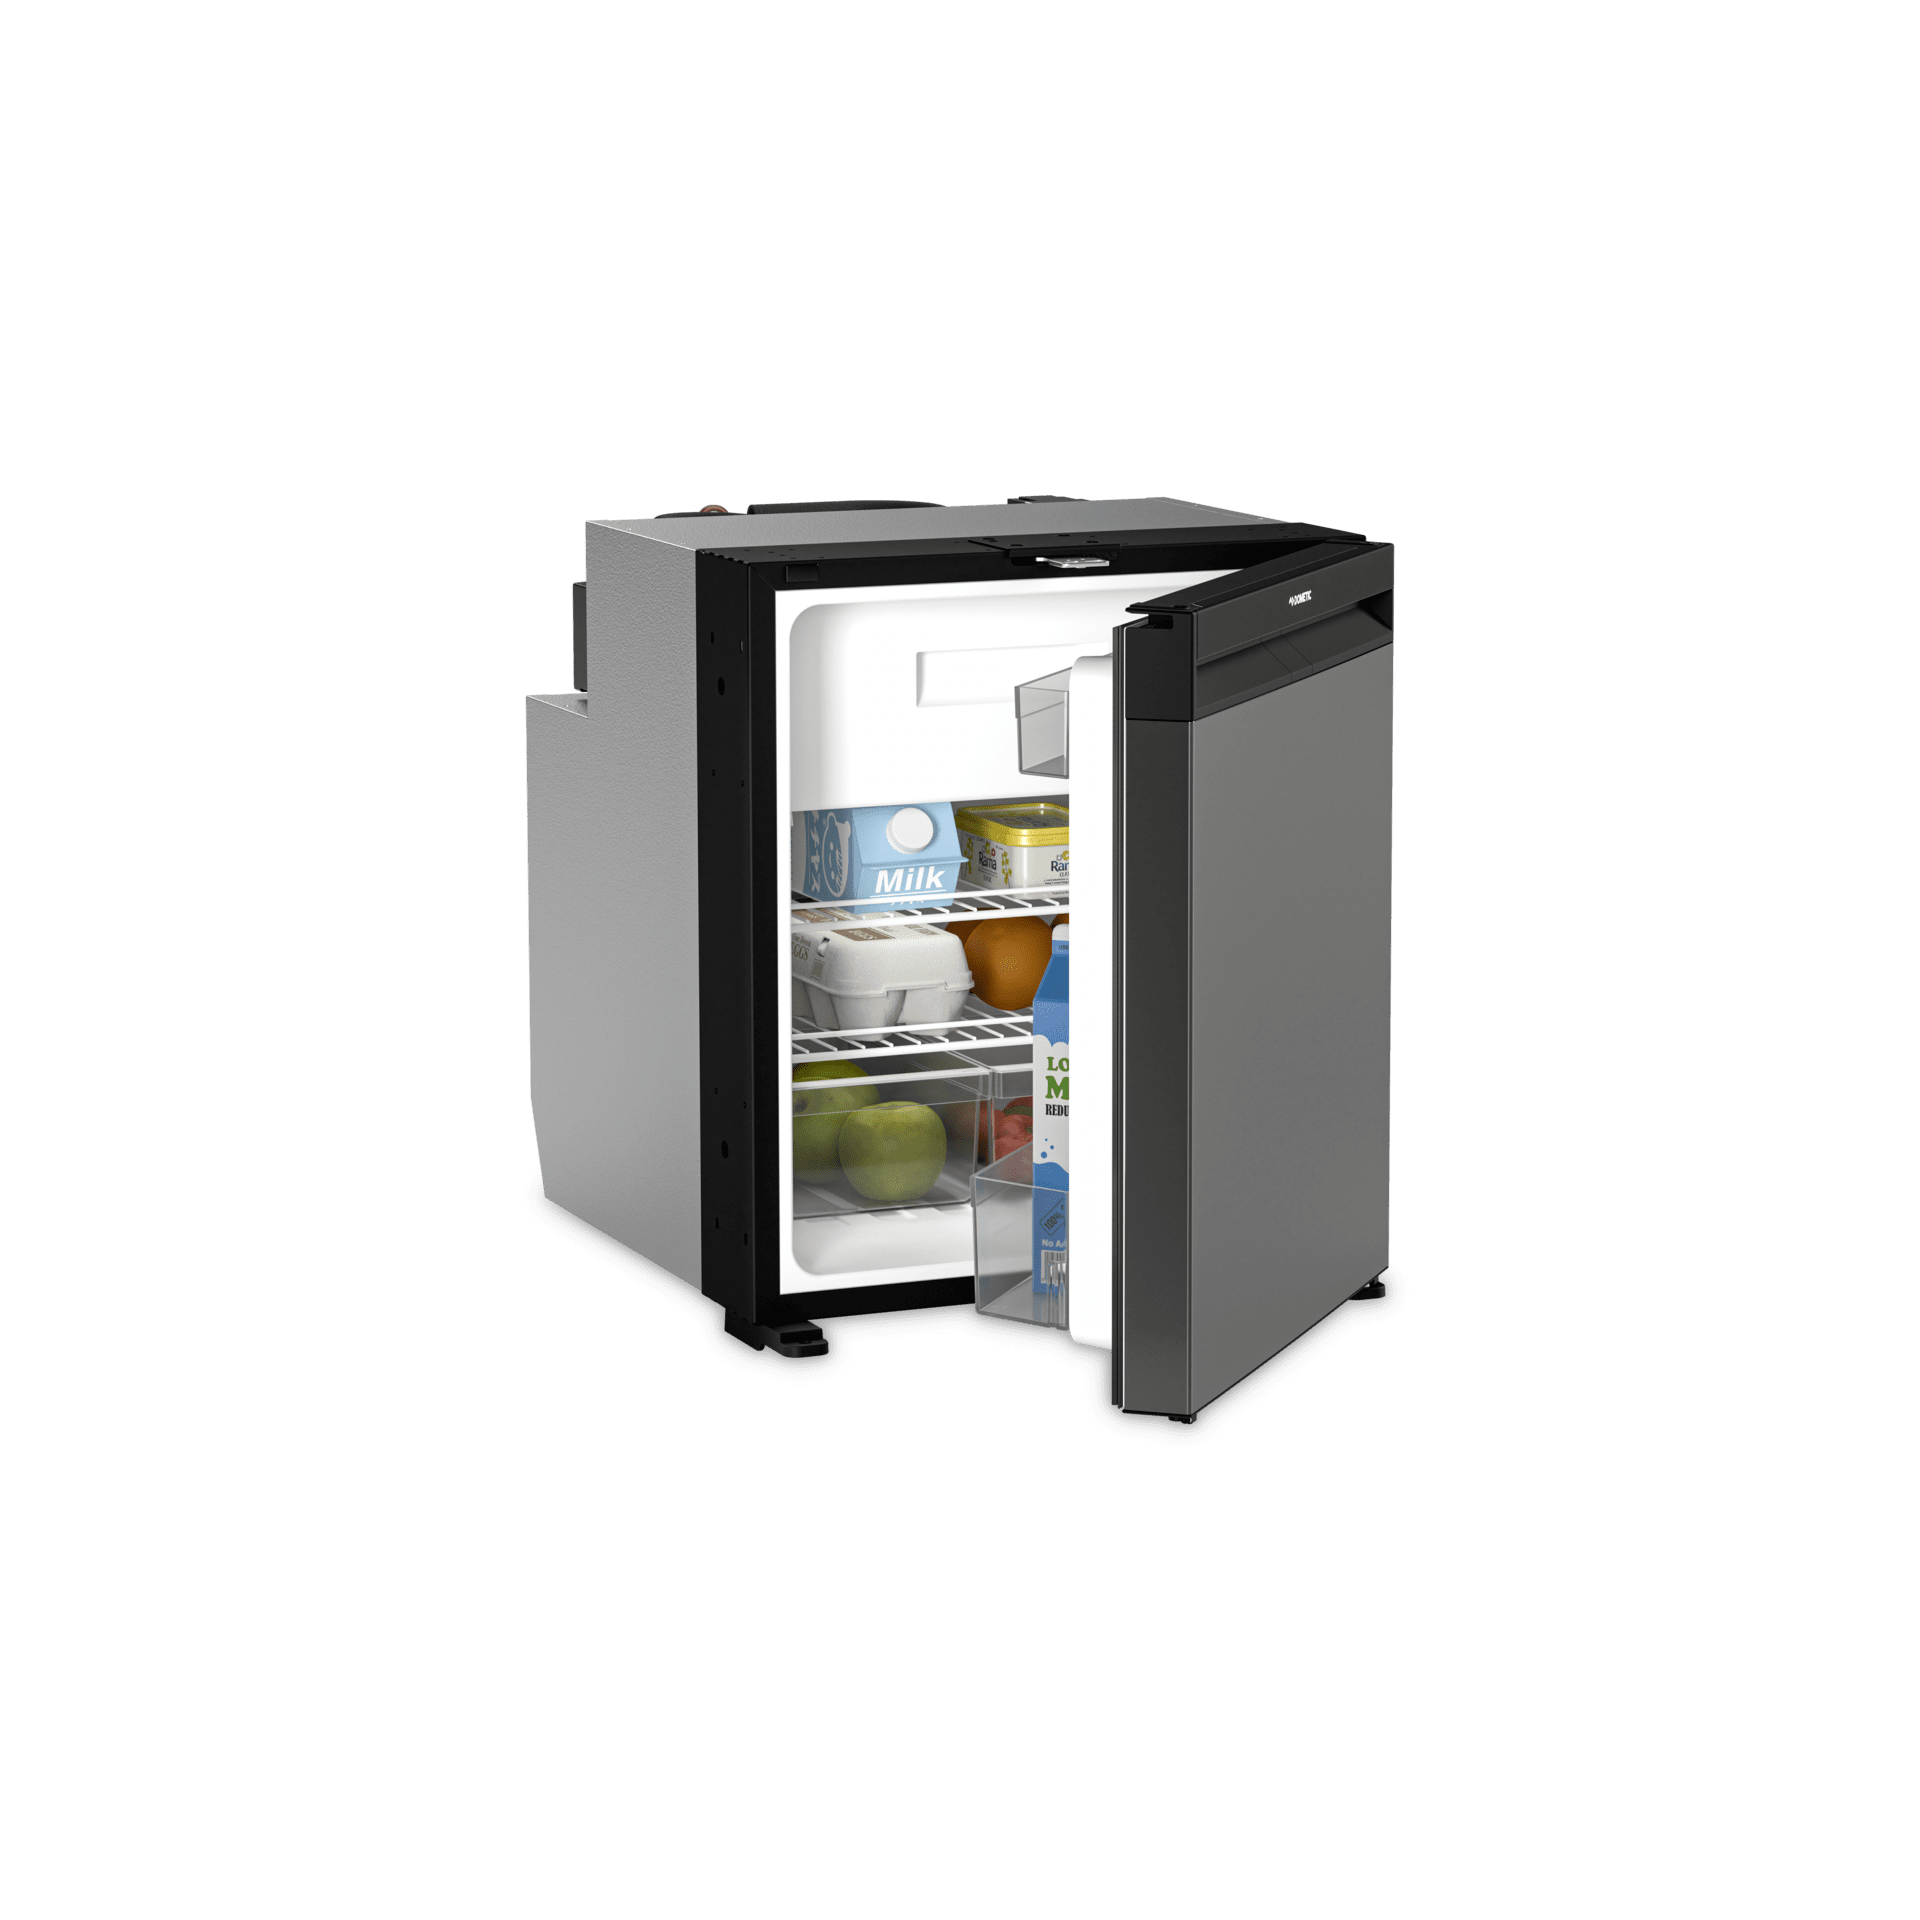 Dometic RC 10.4T 70 - Kompressor-Kühlschrank, 70 l, TFT-Display